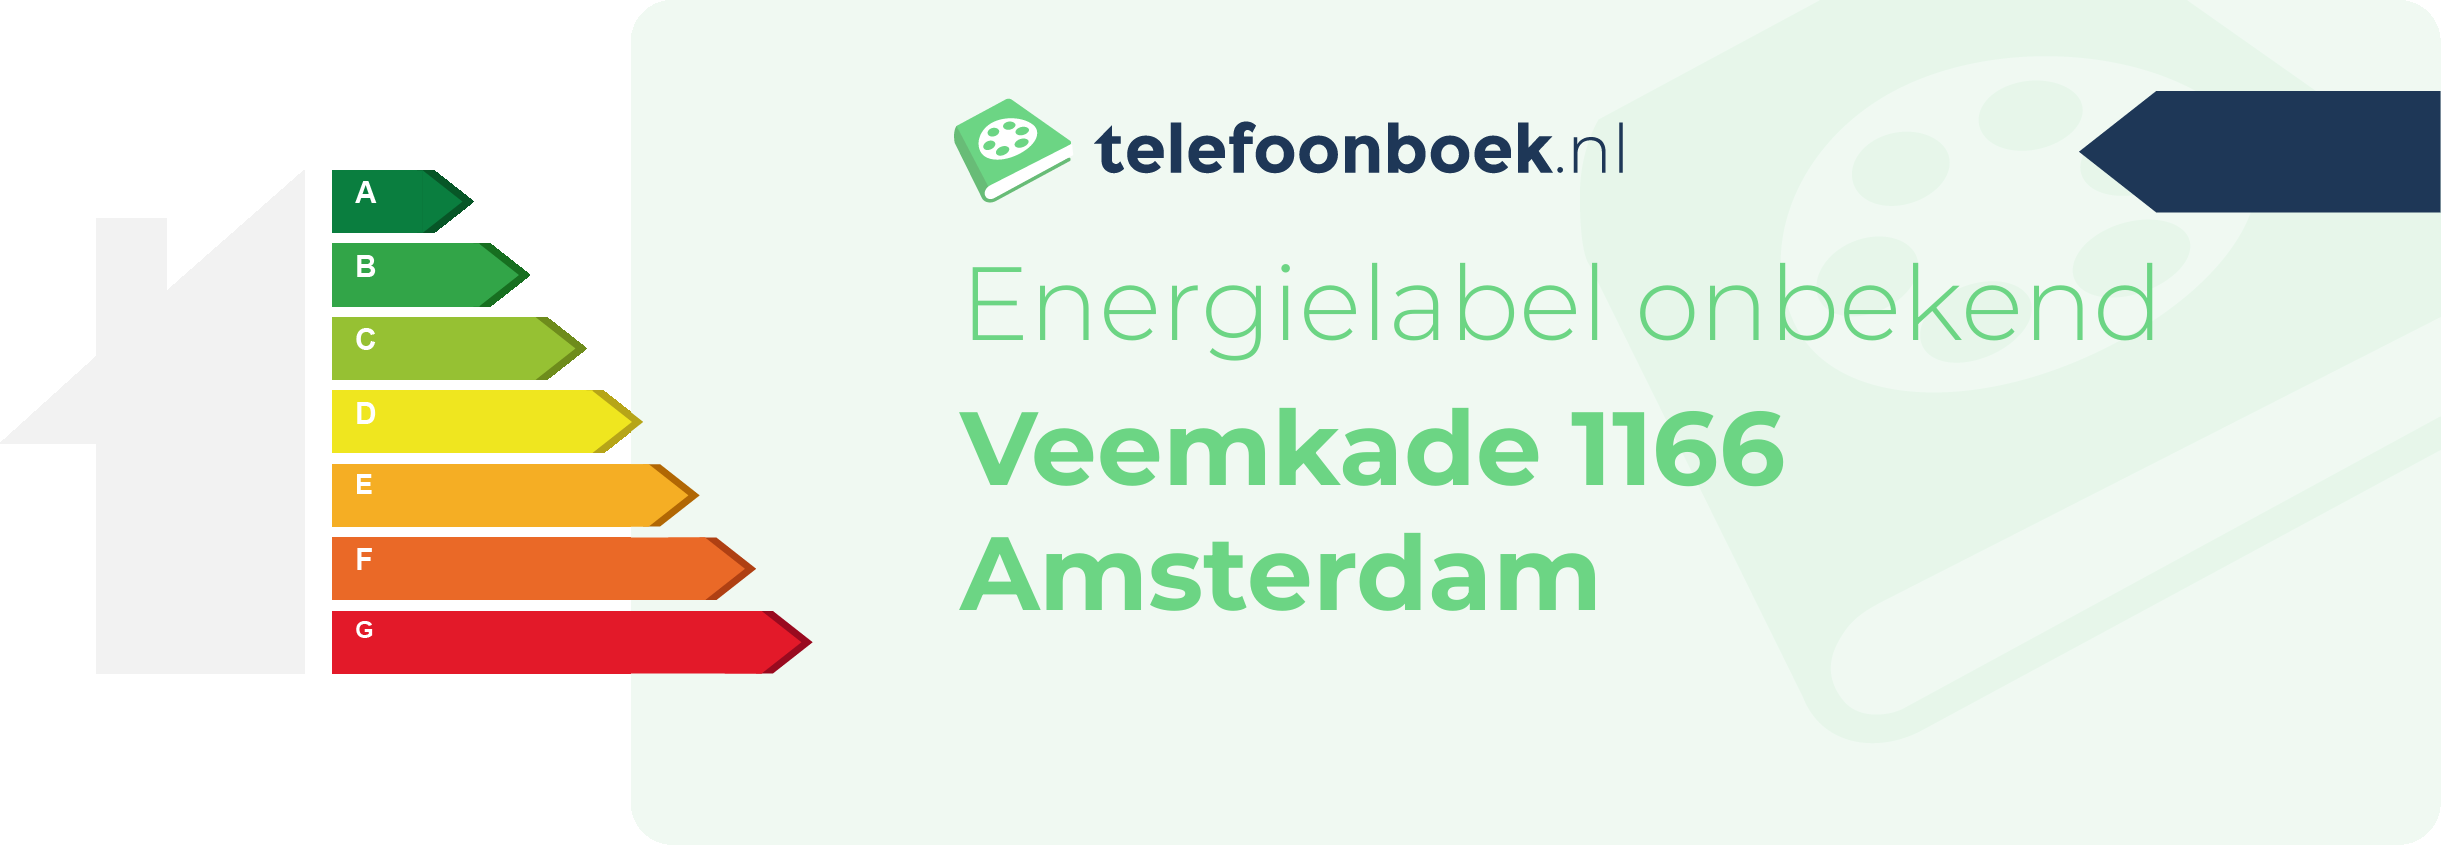 Energielabel Veemkade 1166 Amsterdam